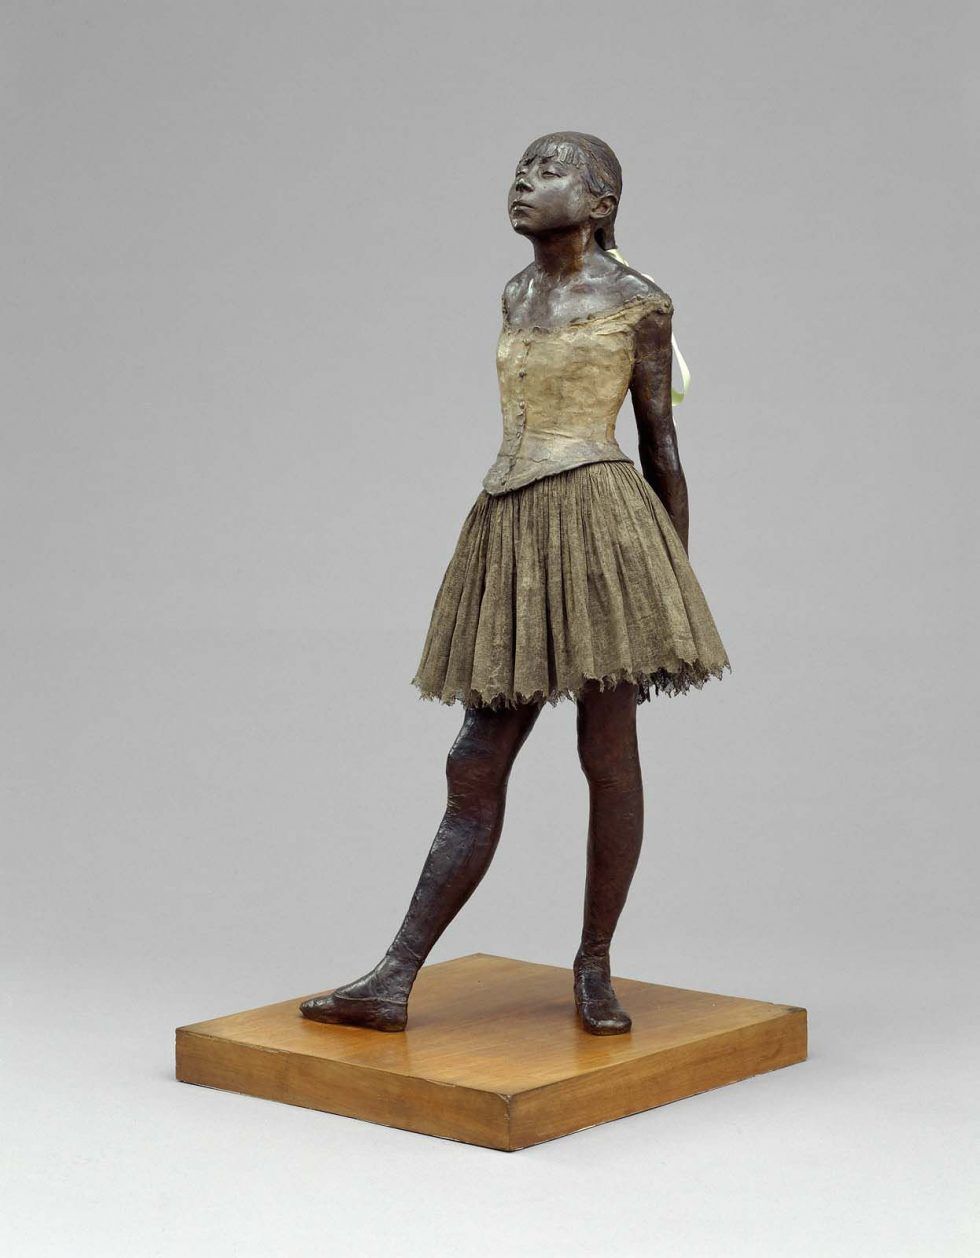 Edgar Degas, Petite danseuse de quatroze ans [Kleine vierzehnjährige Tänzerin], Original aus Wachs 1880/81, Abguss um 1932/36, Bronze, teilweise bemalt, Baumwoll-Tutu und Seidenband, 98 cm (Stiftung Sammlung E. G. Bührle, Zürich)